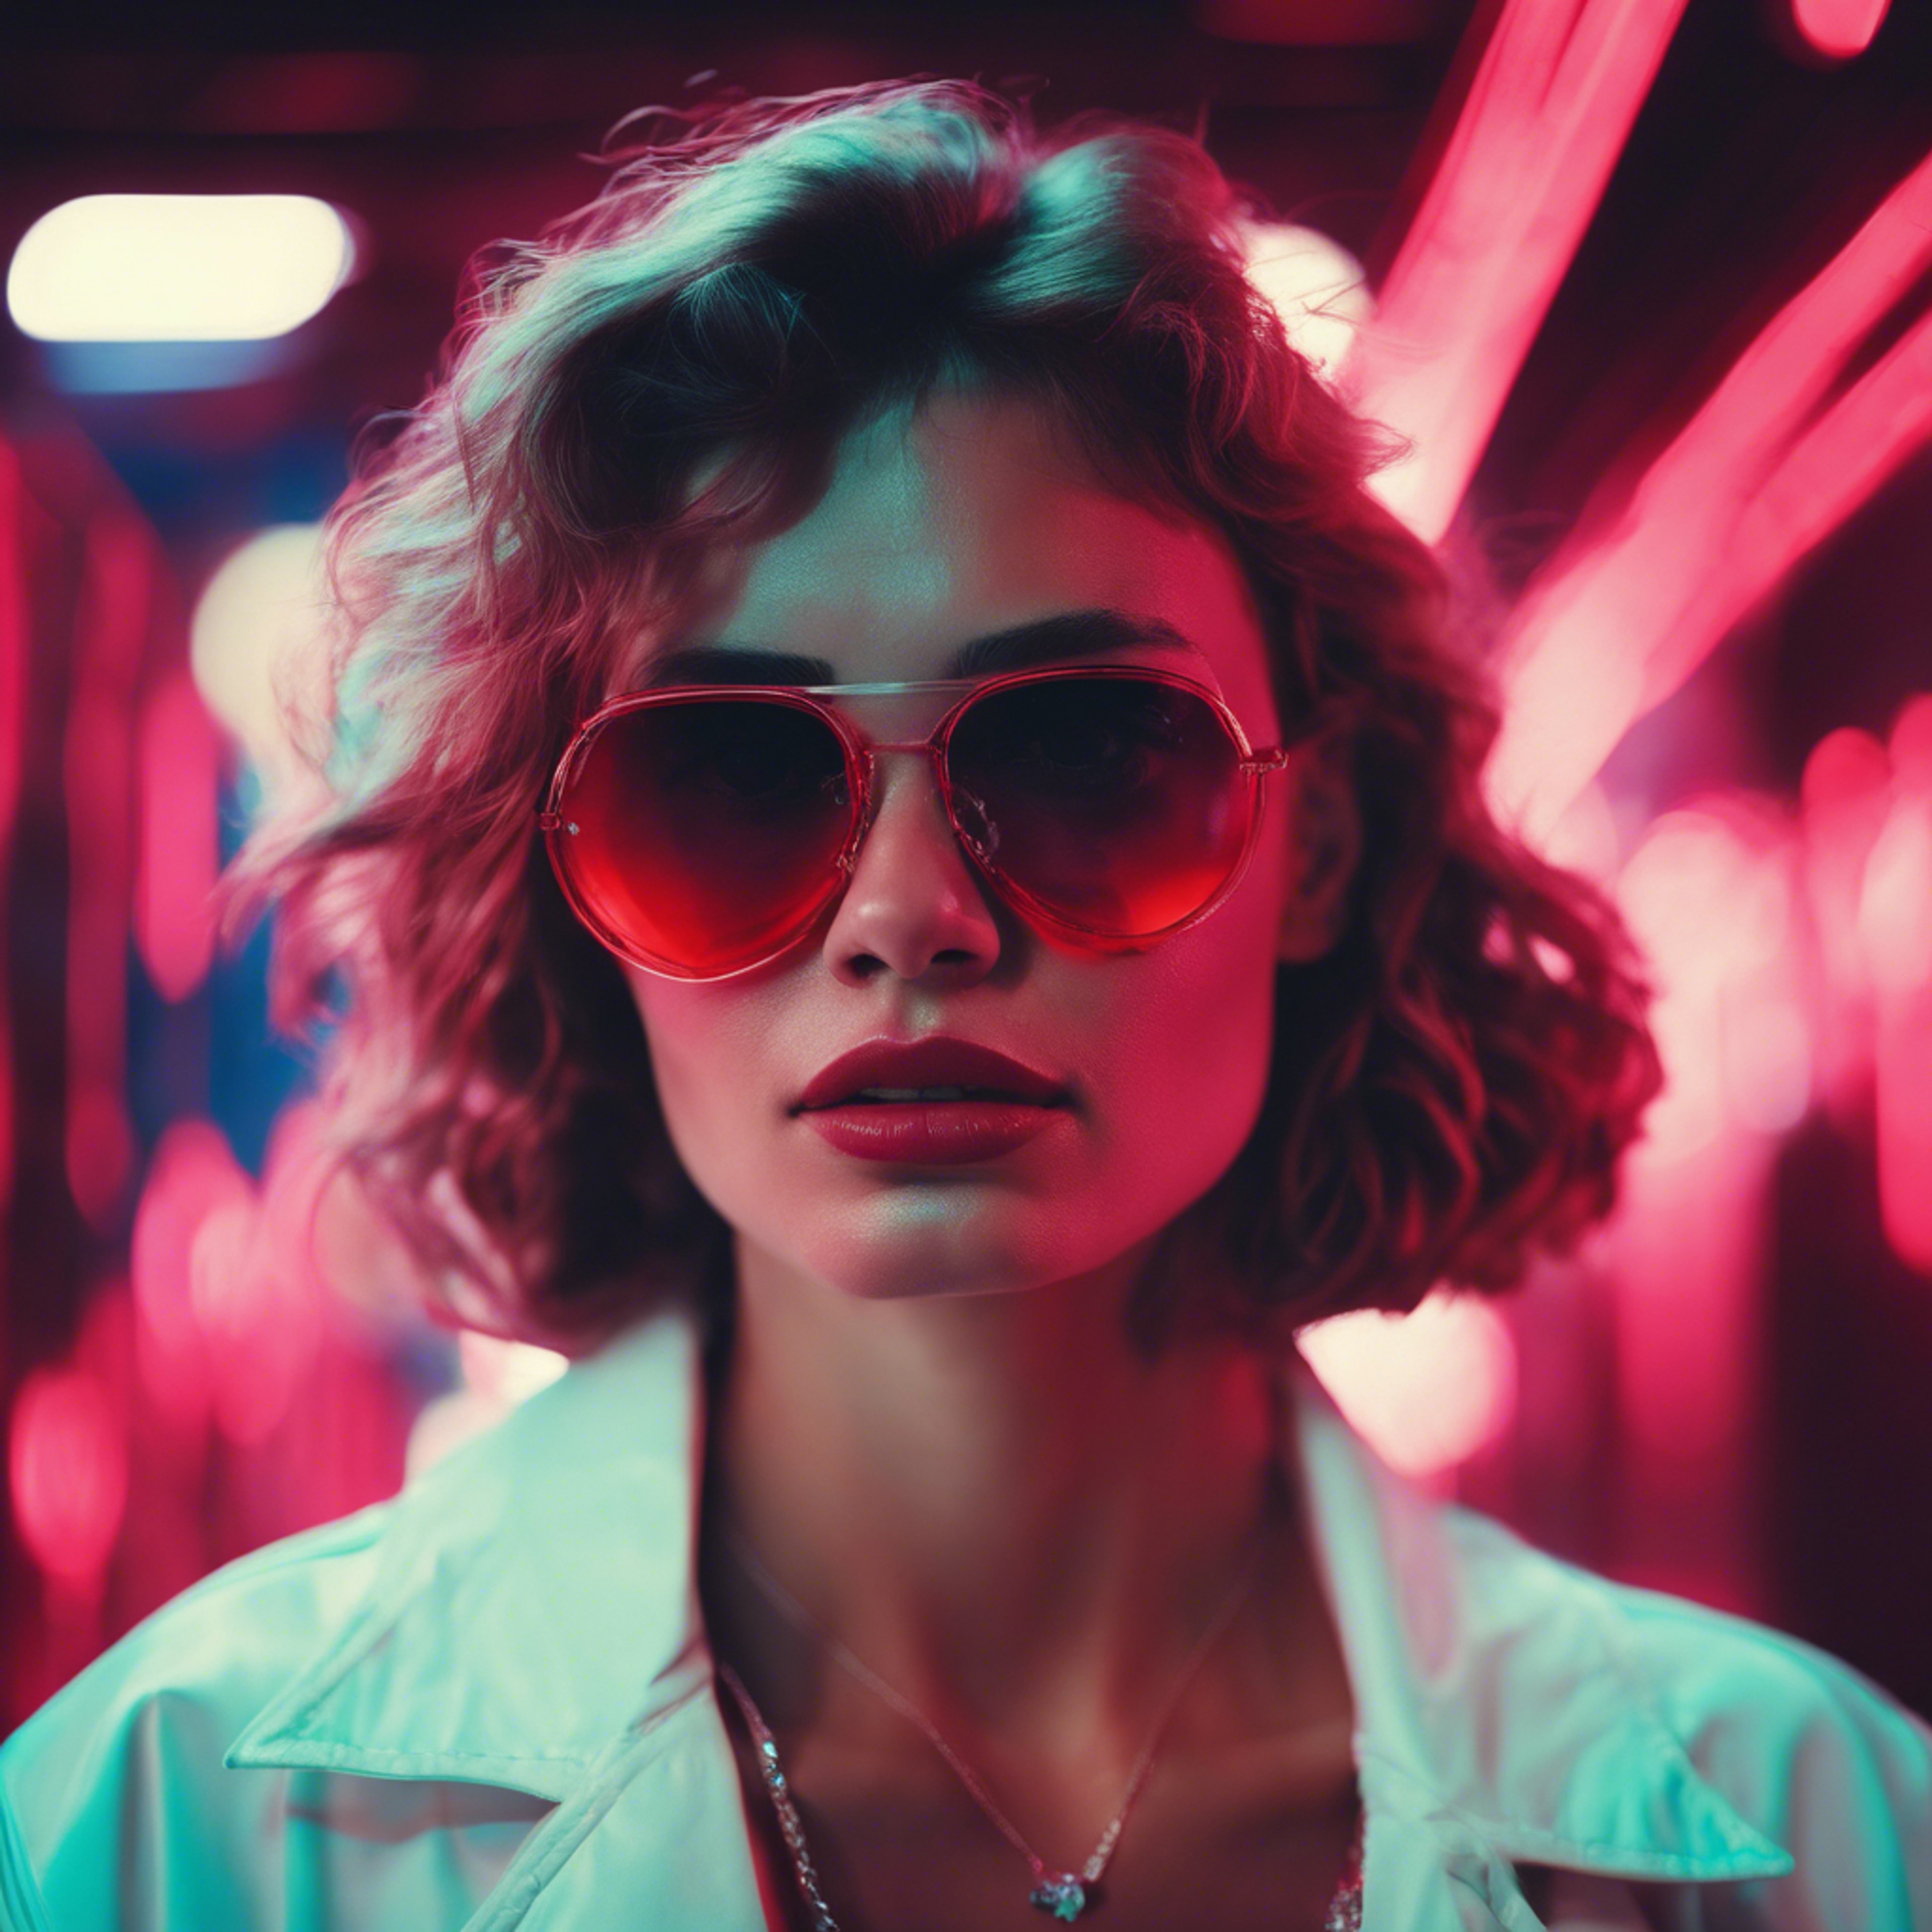 Retro 80's style portrait of a woman in sunglasses lit by cool red neon lights. Papel de parede[9fb655559f07479e9c29]